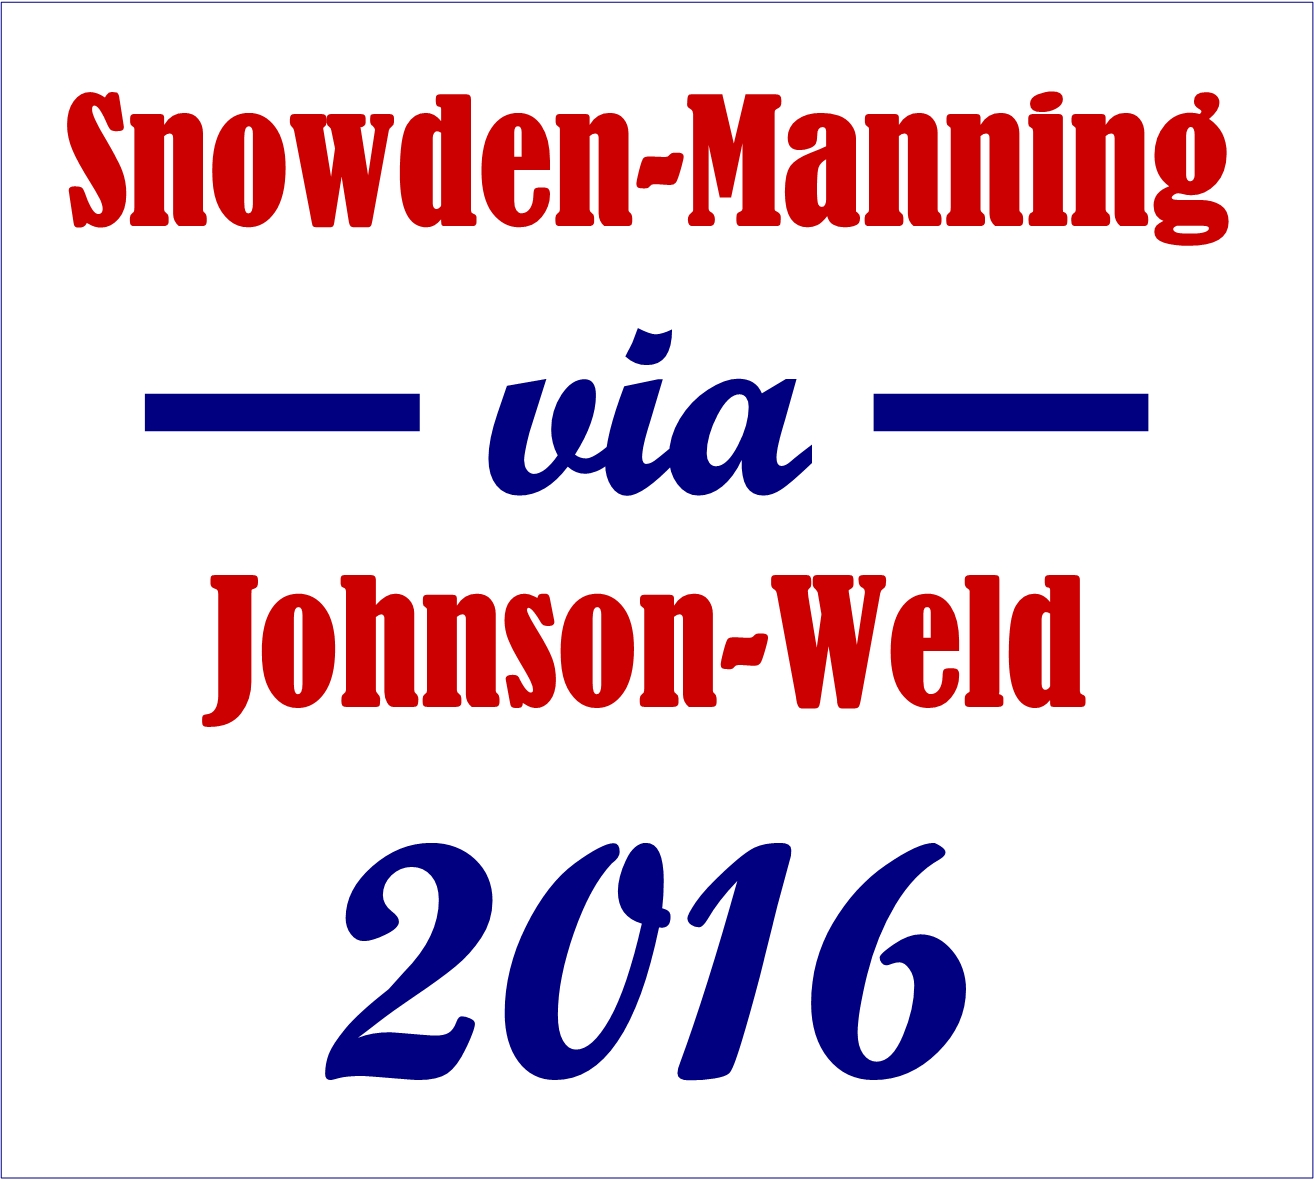 SM_Johnson-Weld